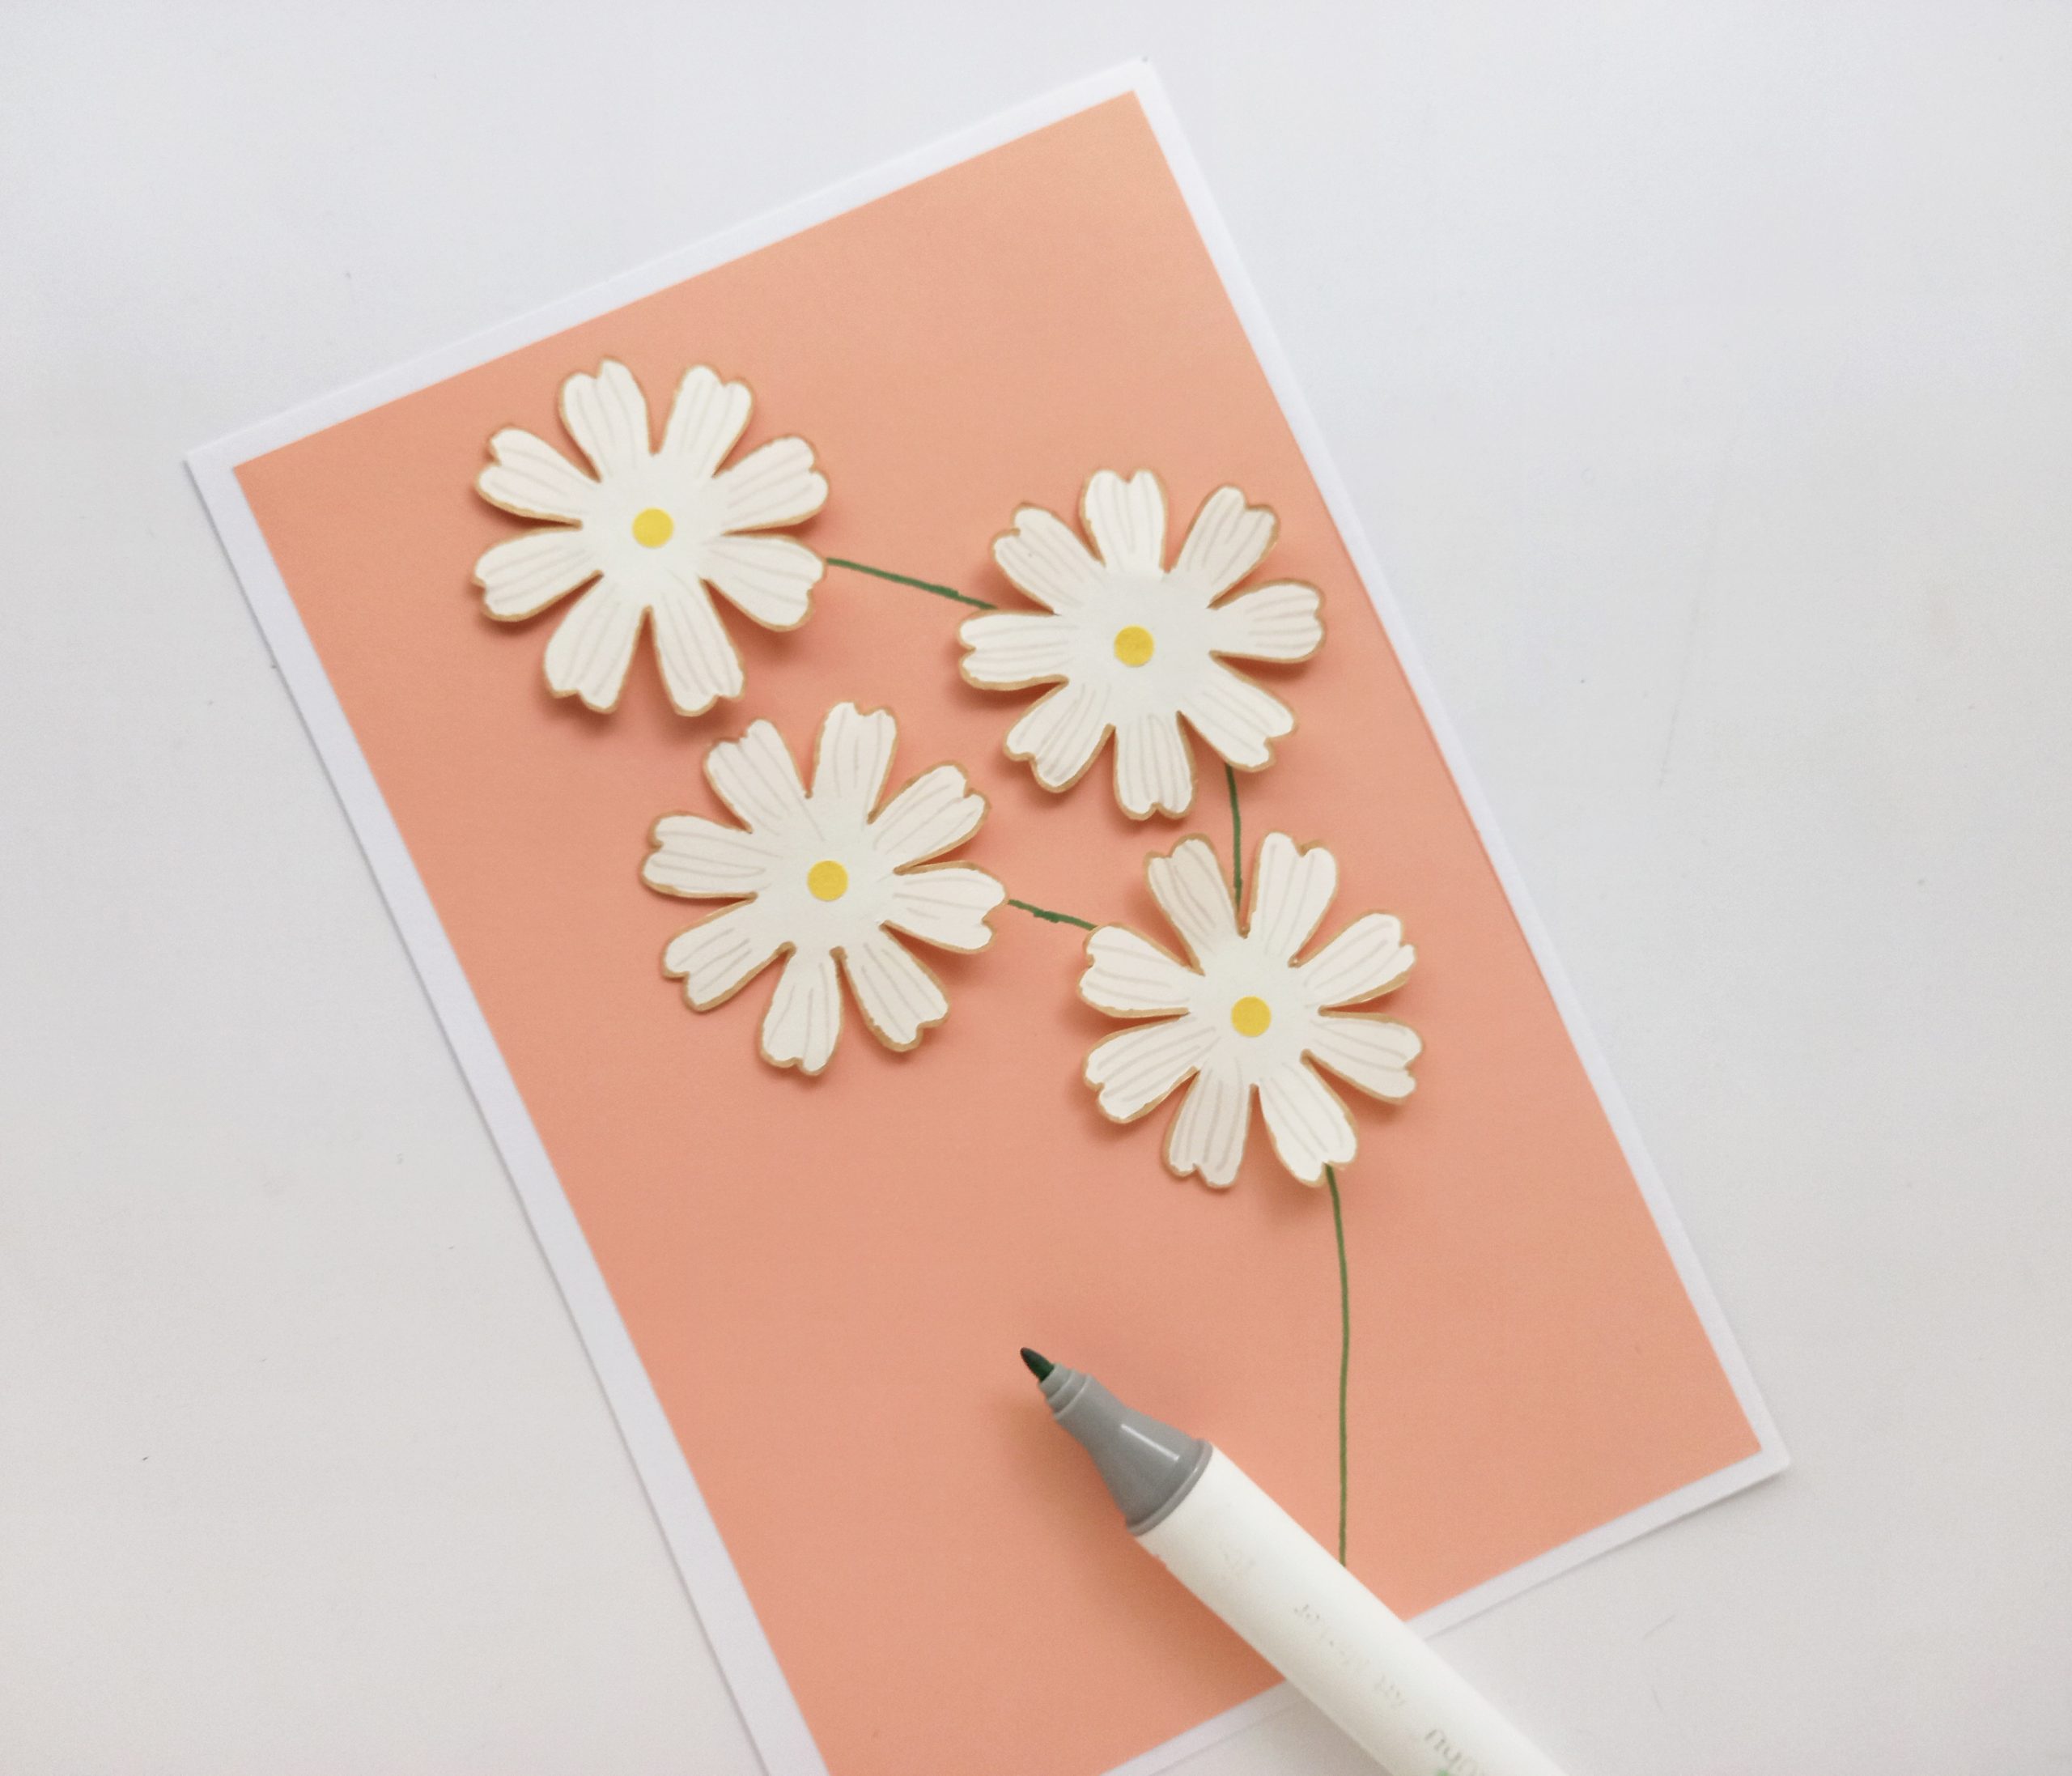 daisy card step by step process